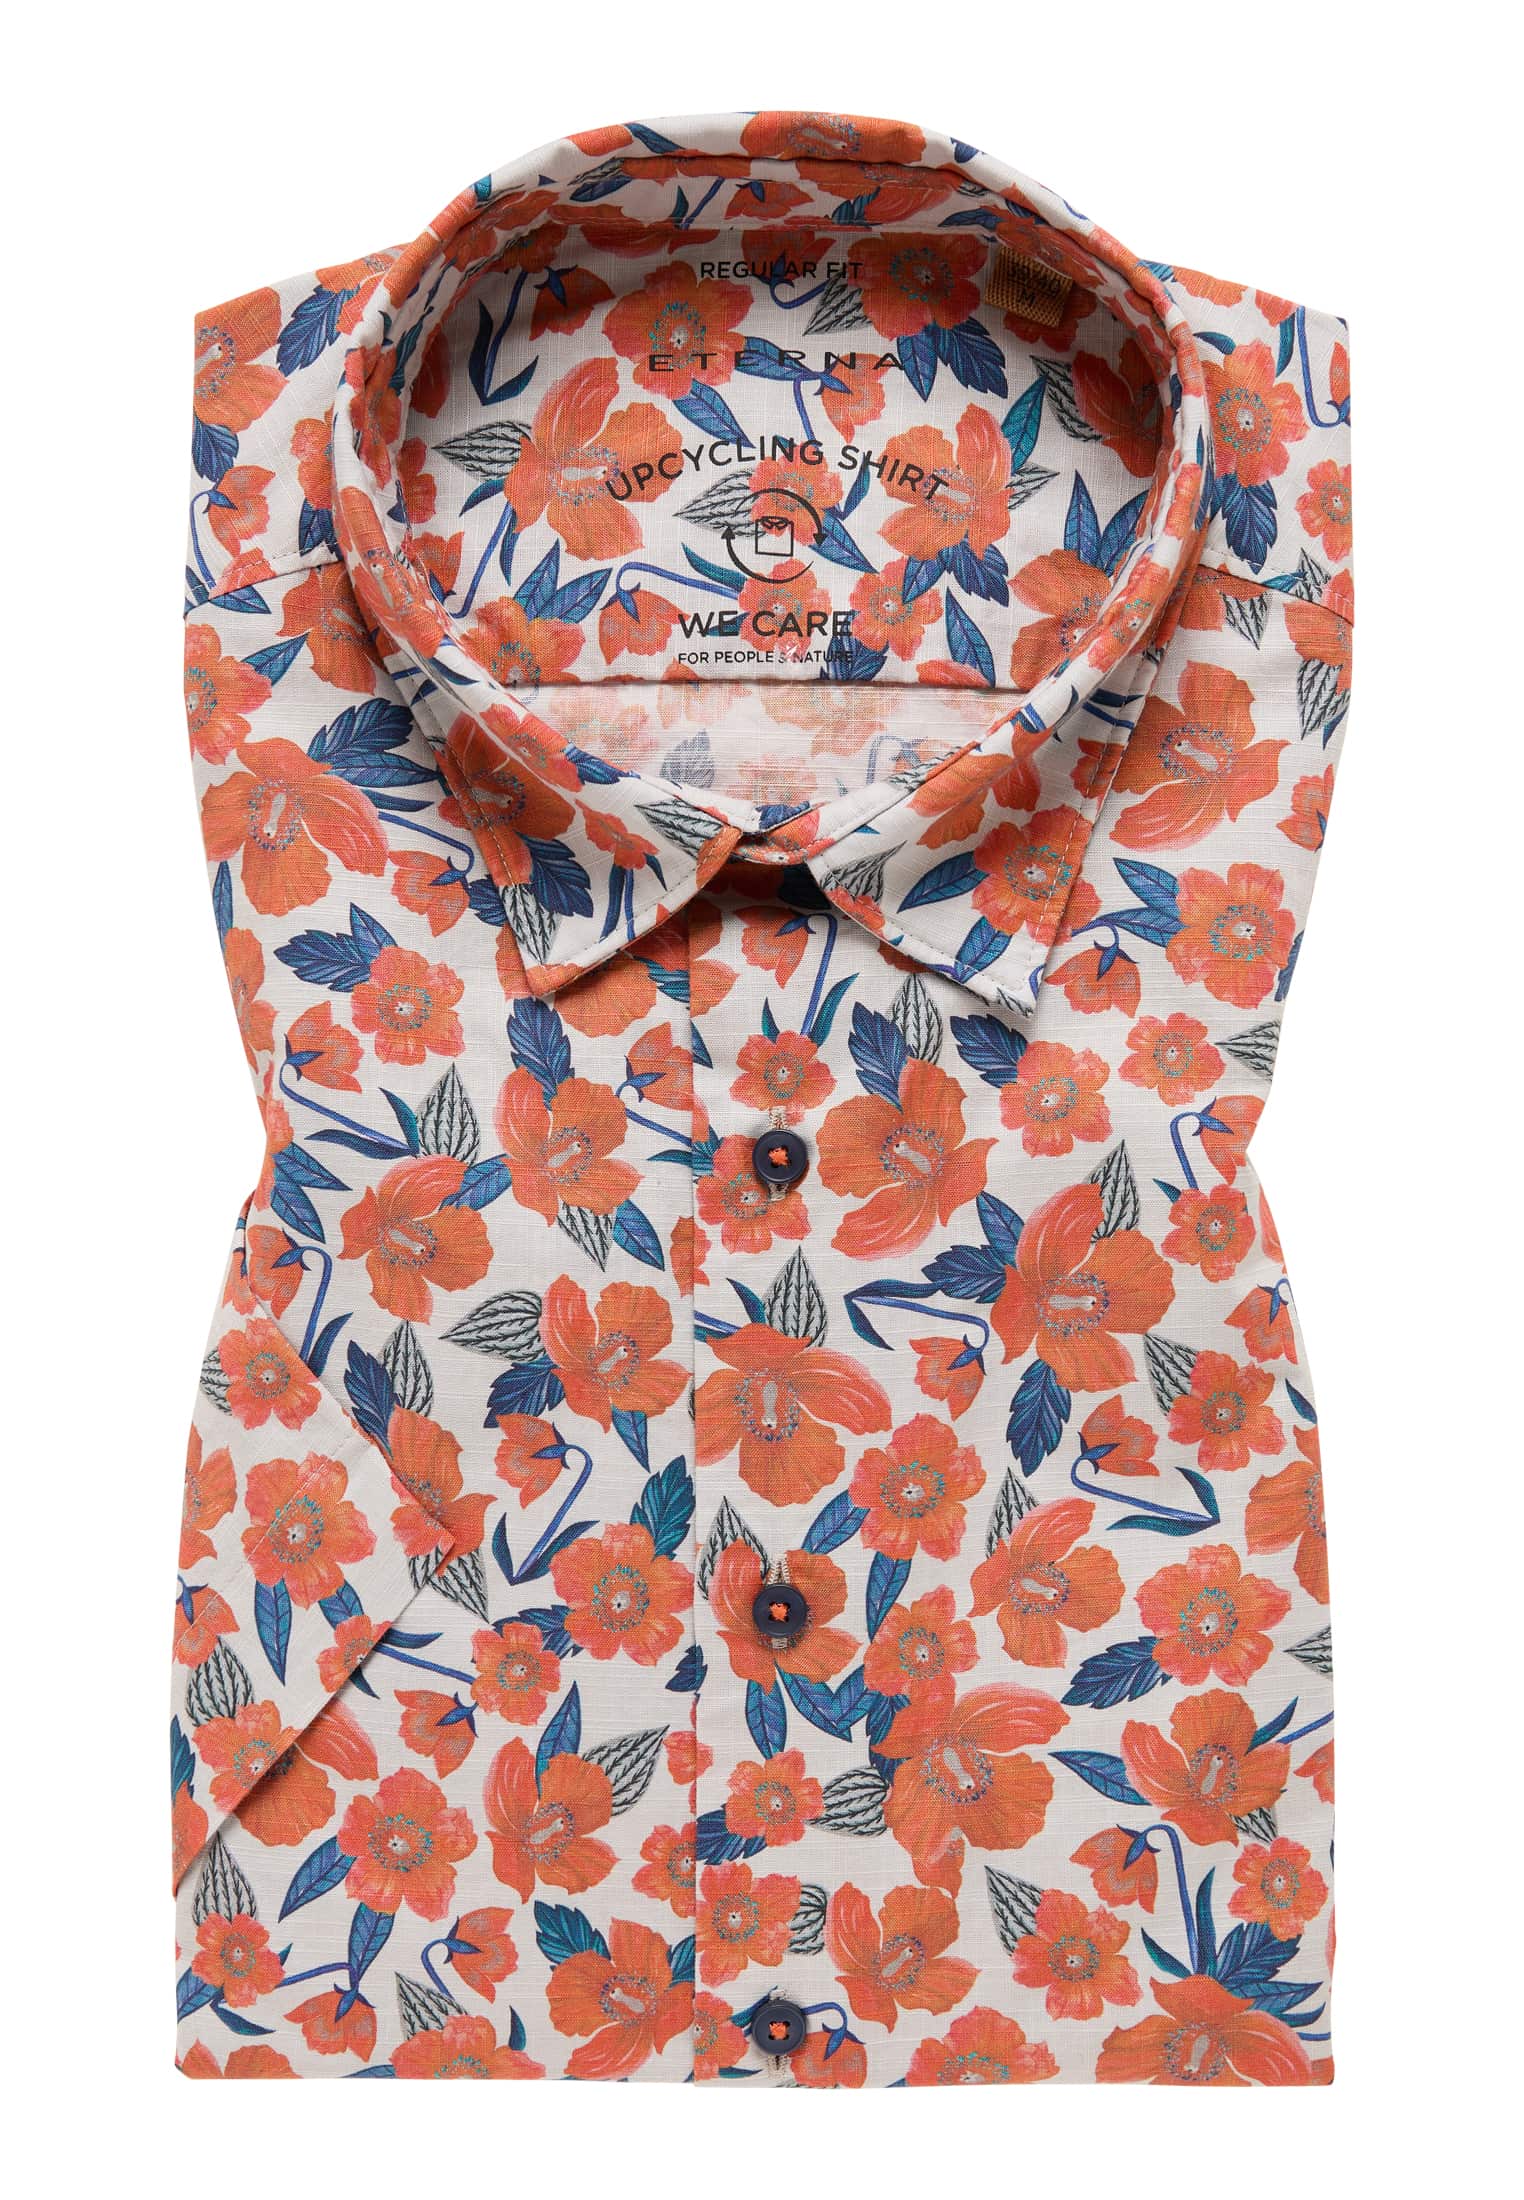 REGULAR FIT Shirt in 1SH04089-08-01-S-1/2 | S | orange short | printed orange | sleeve